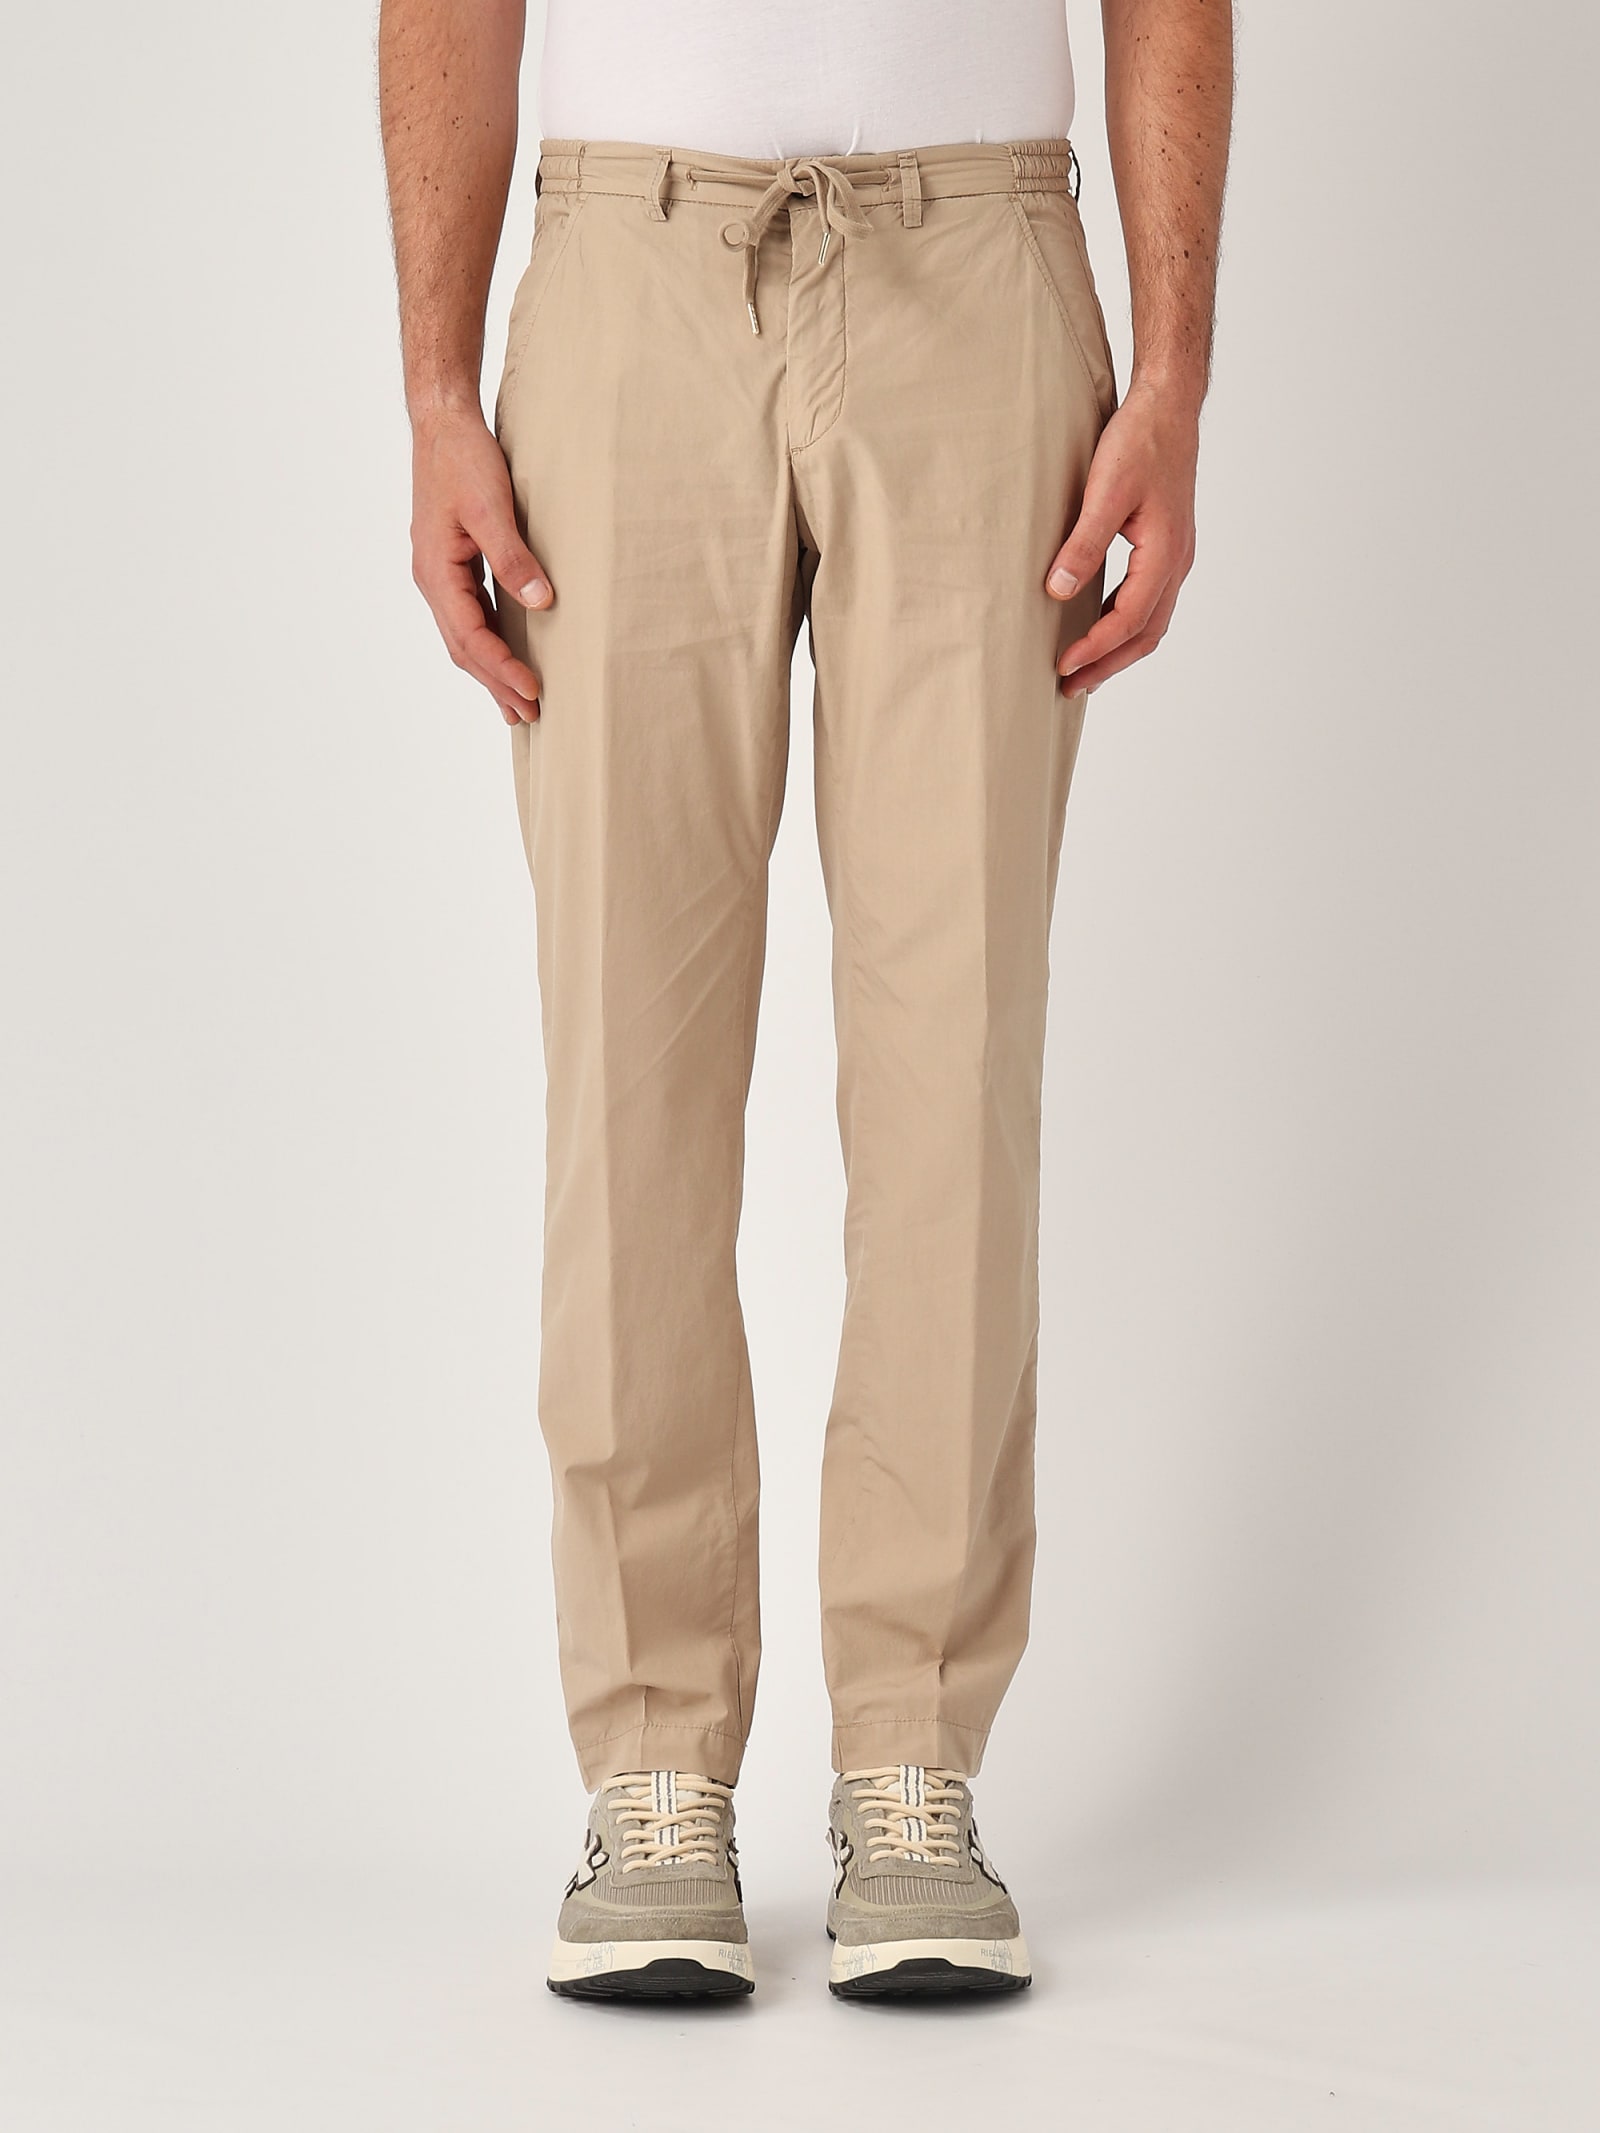 1949 Pantalone Uomo Trousers